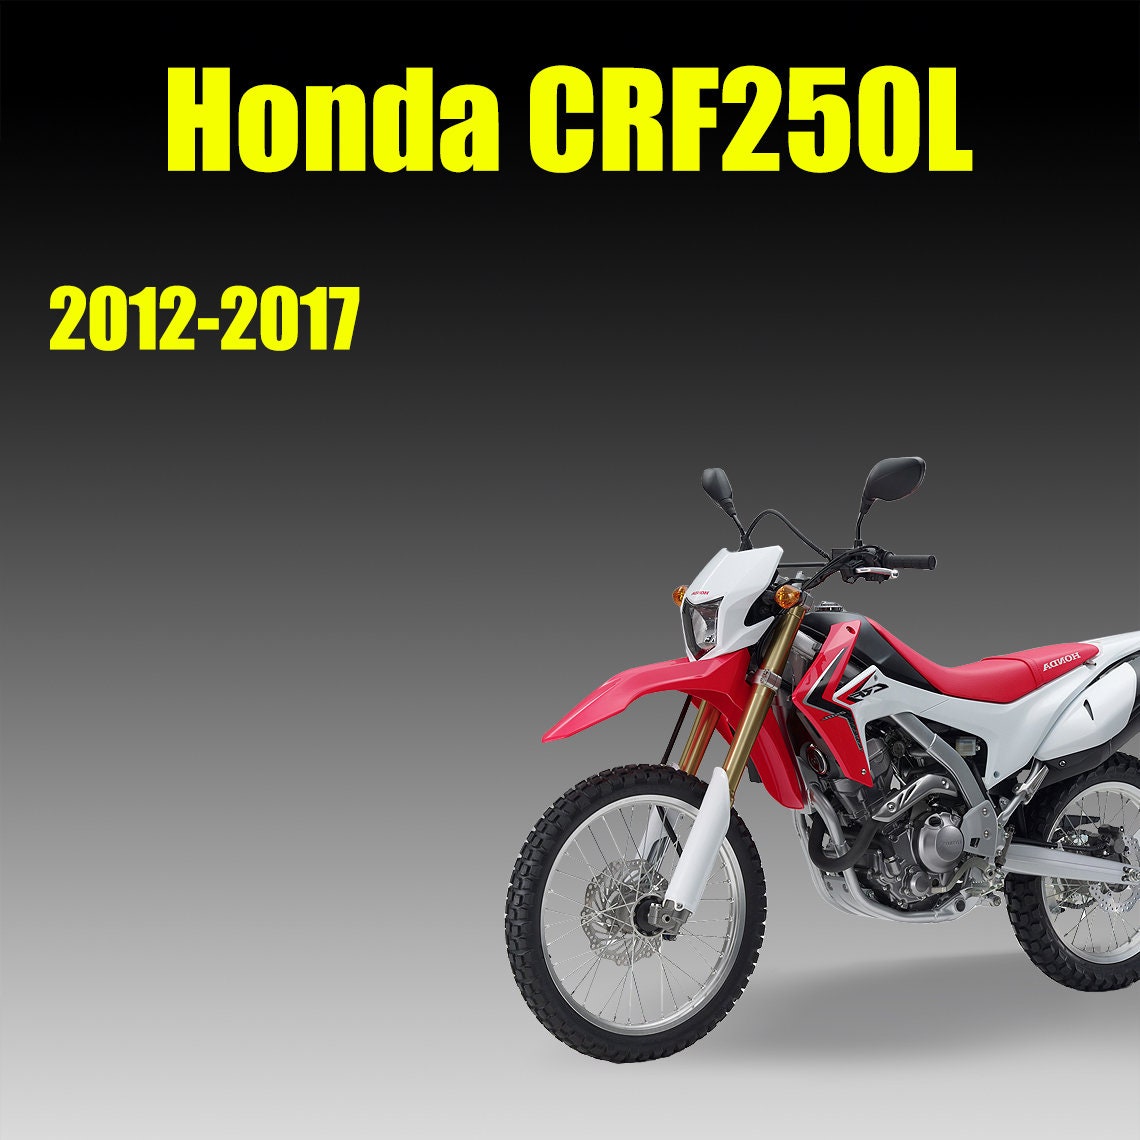 Honda Crf250l 